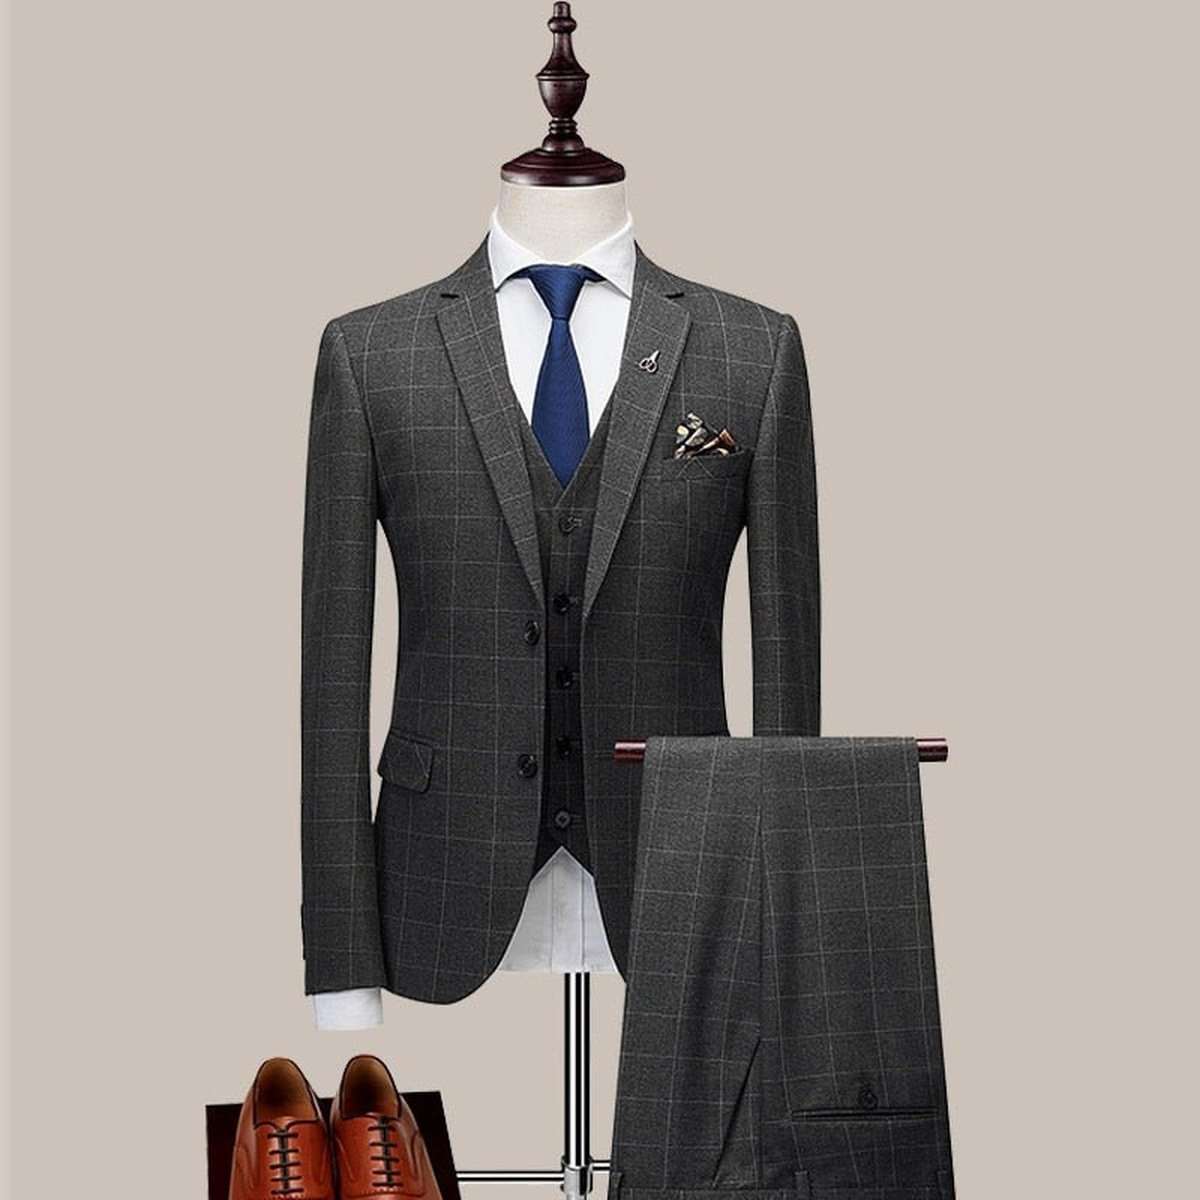 Elegance Men's Suit for Weddings, Parties, and Proms